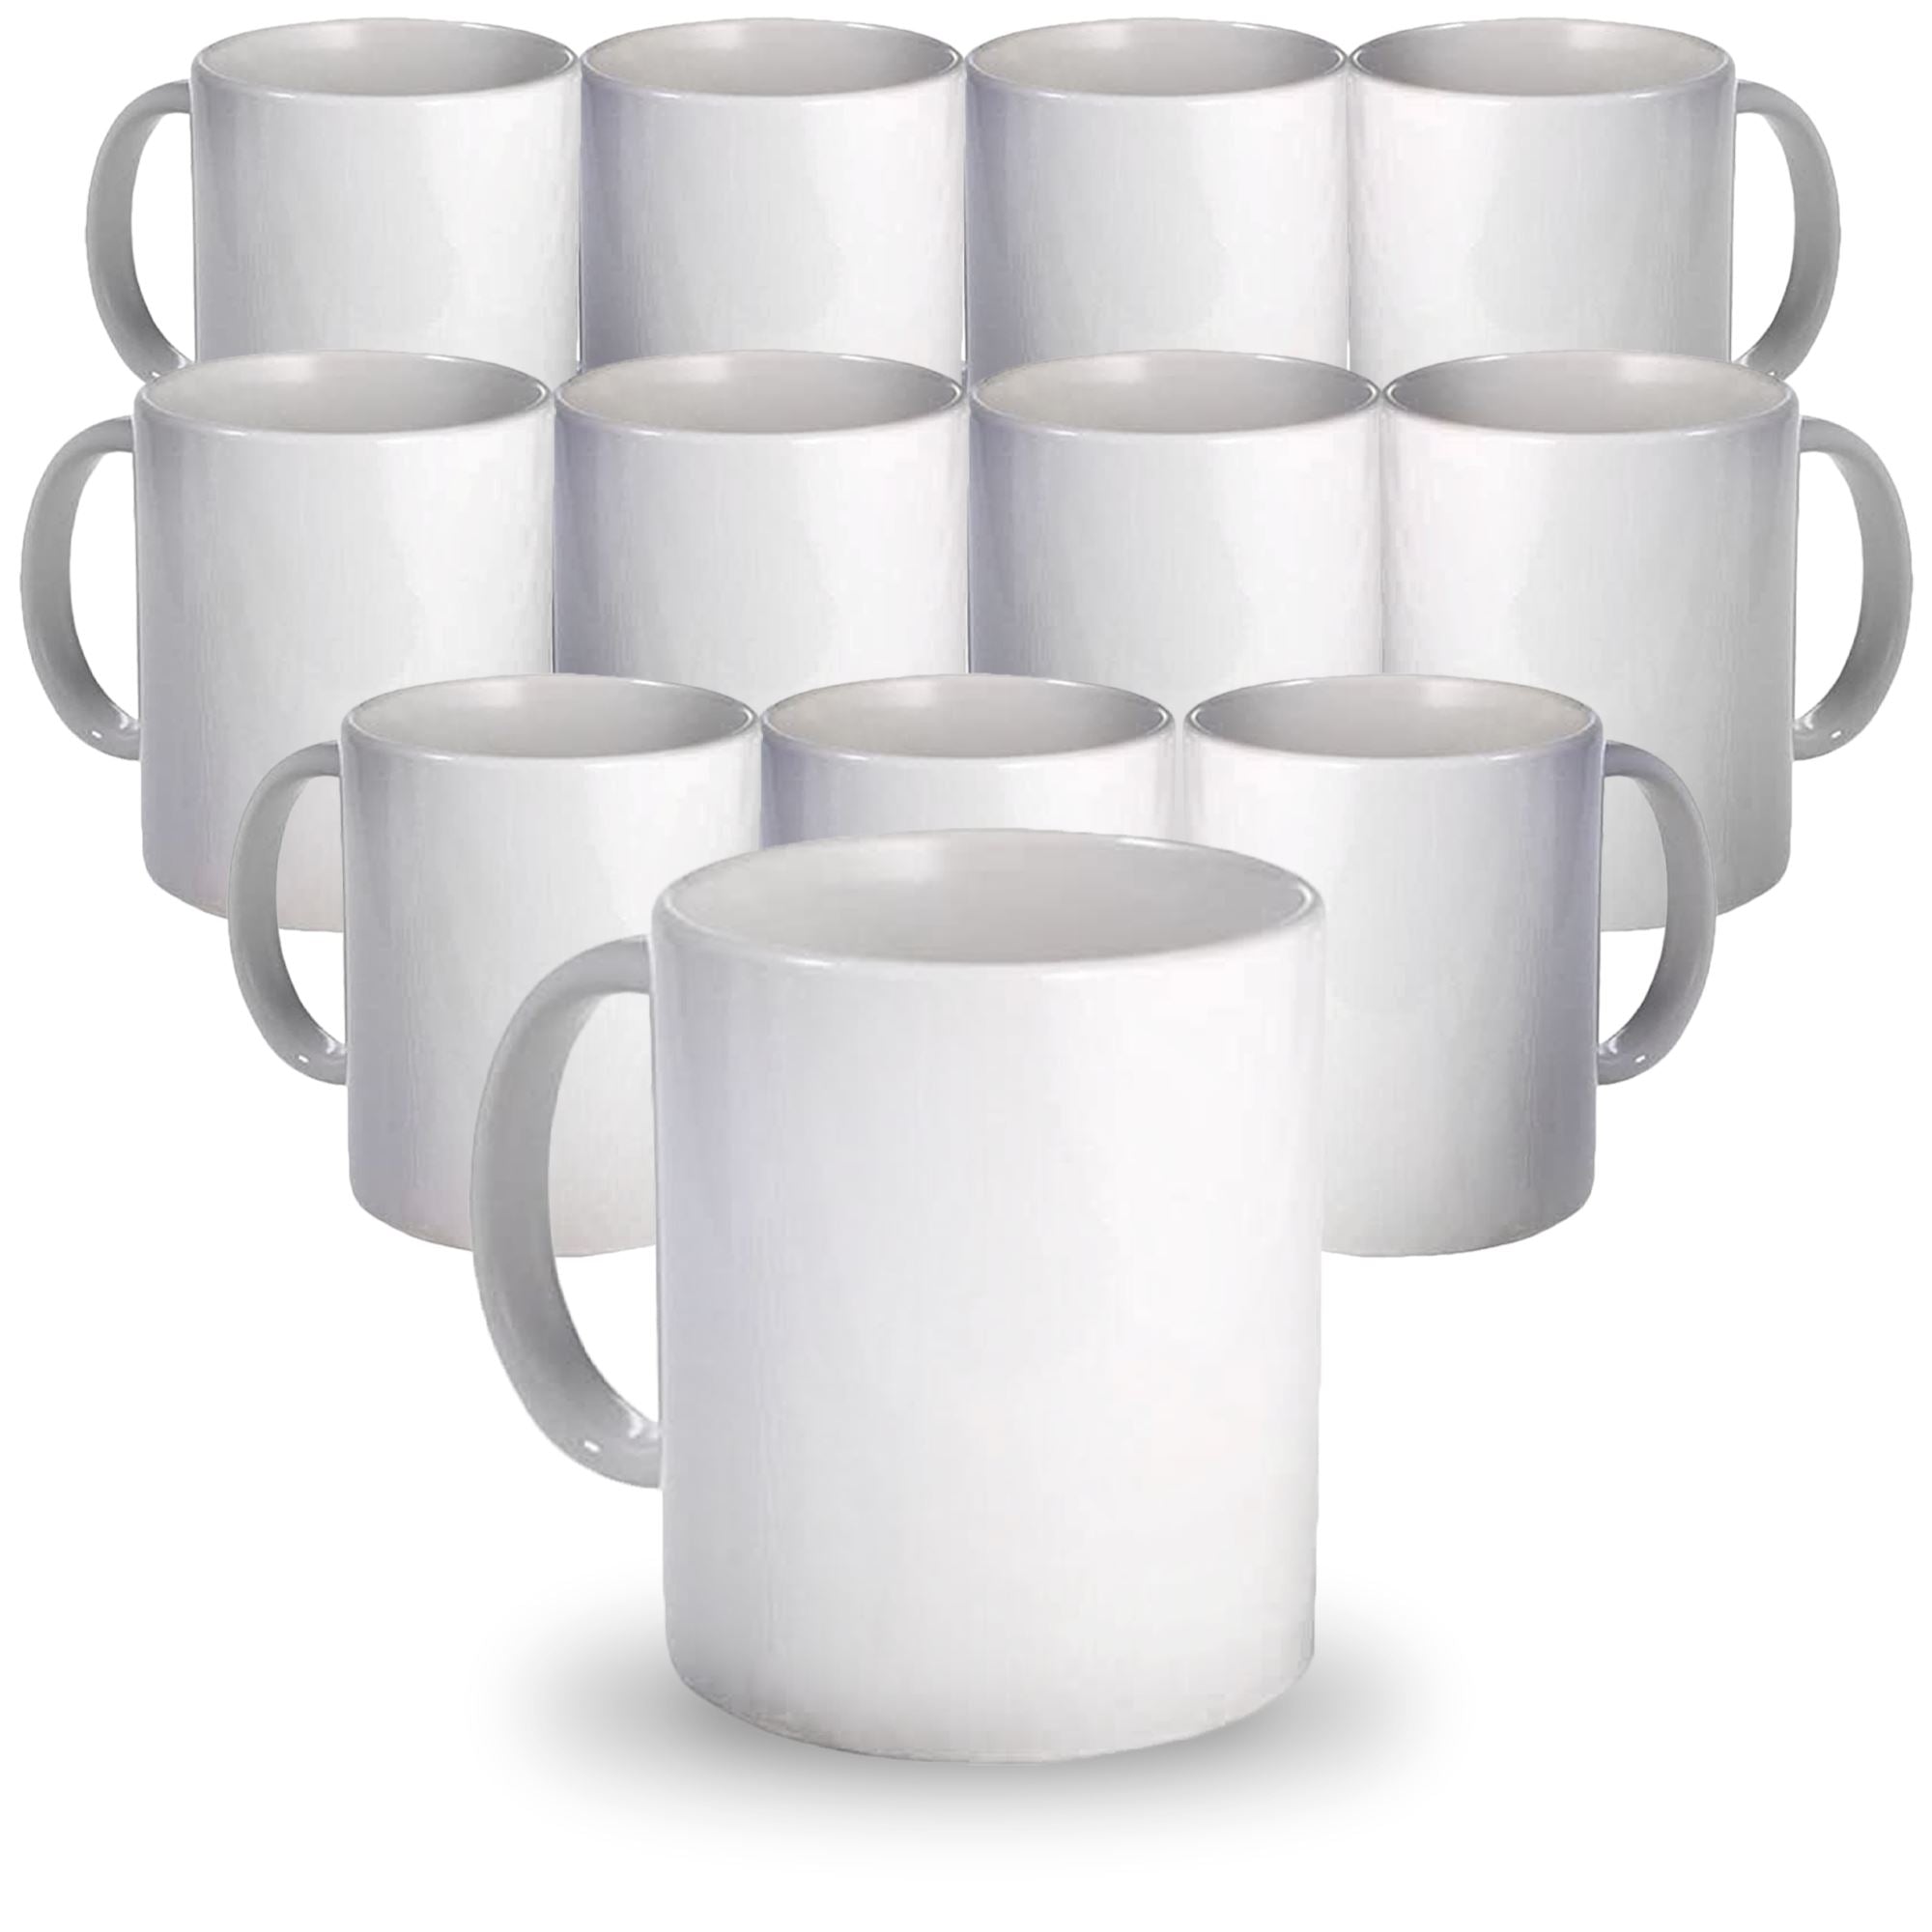 TANGLONG tanglong sublimation mugs sublimation mugs blank tazas para  sublimacion white ceramic sublimation cups bulk mugs for coffee s